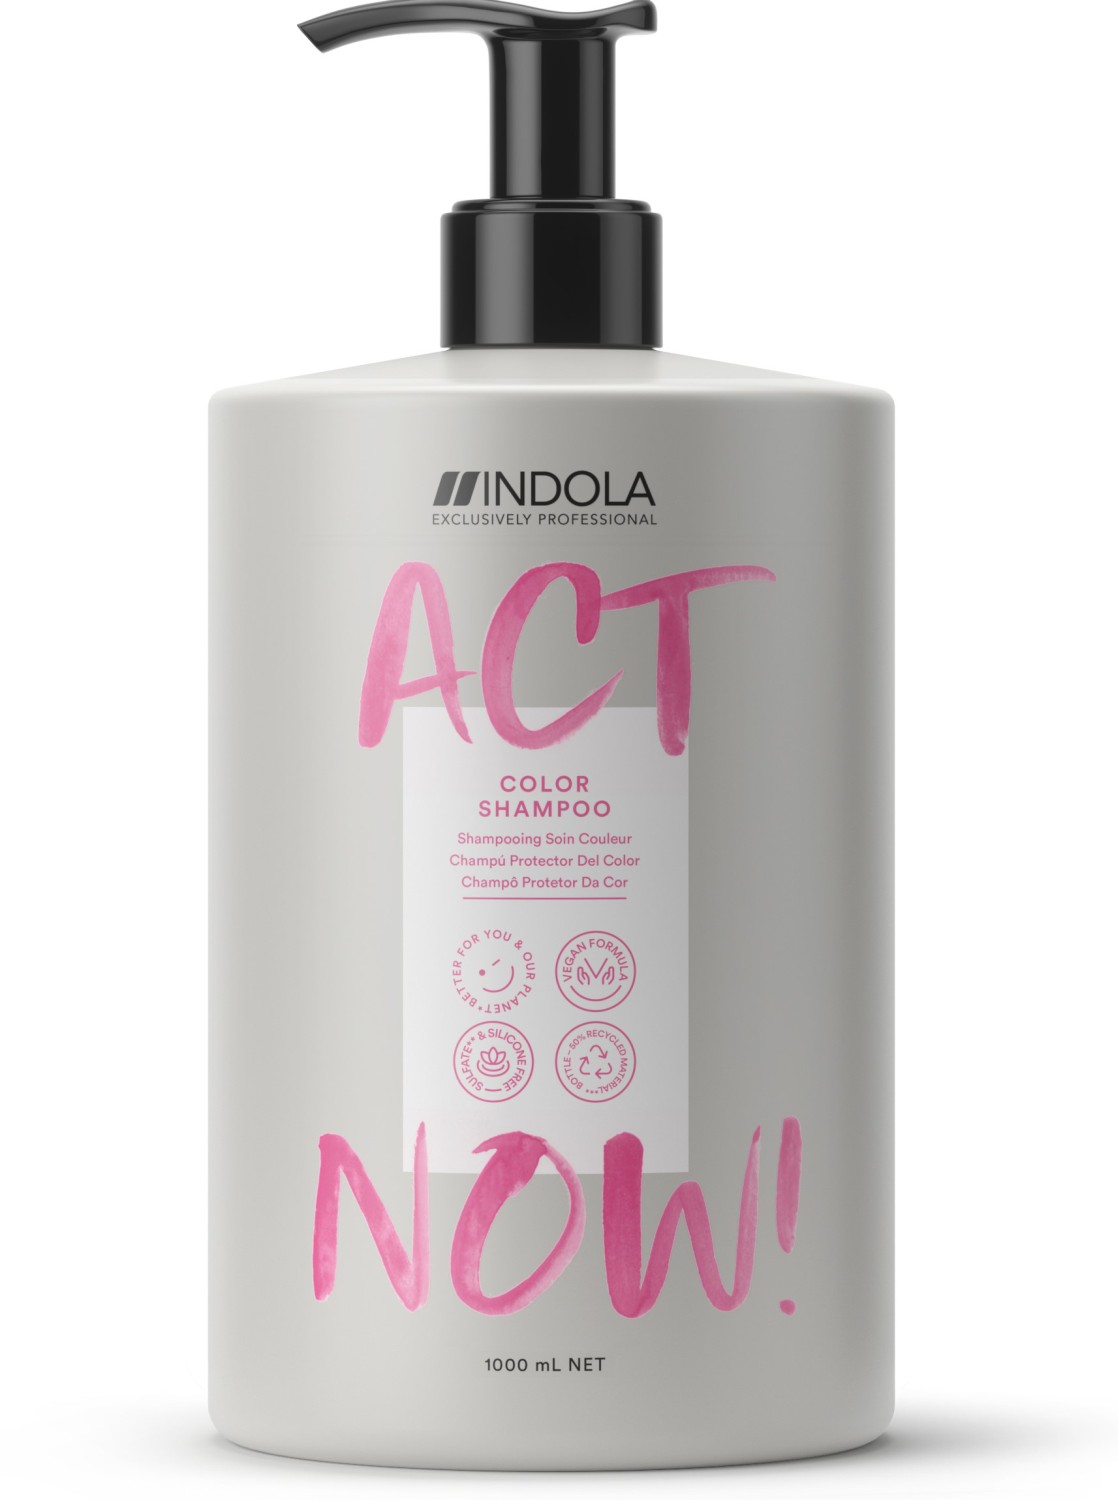  Indola ACT NOW! Color Shampoo 1000 ml 